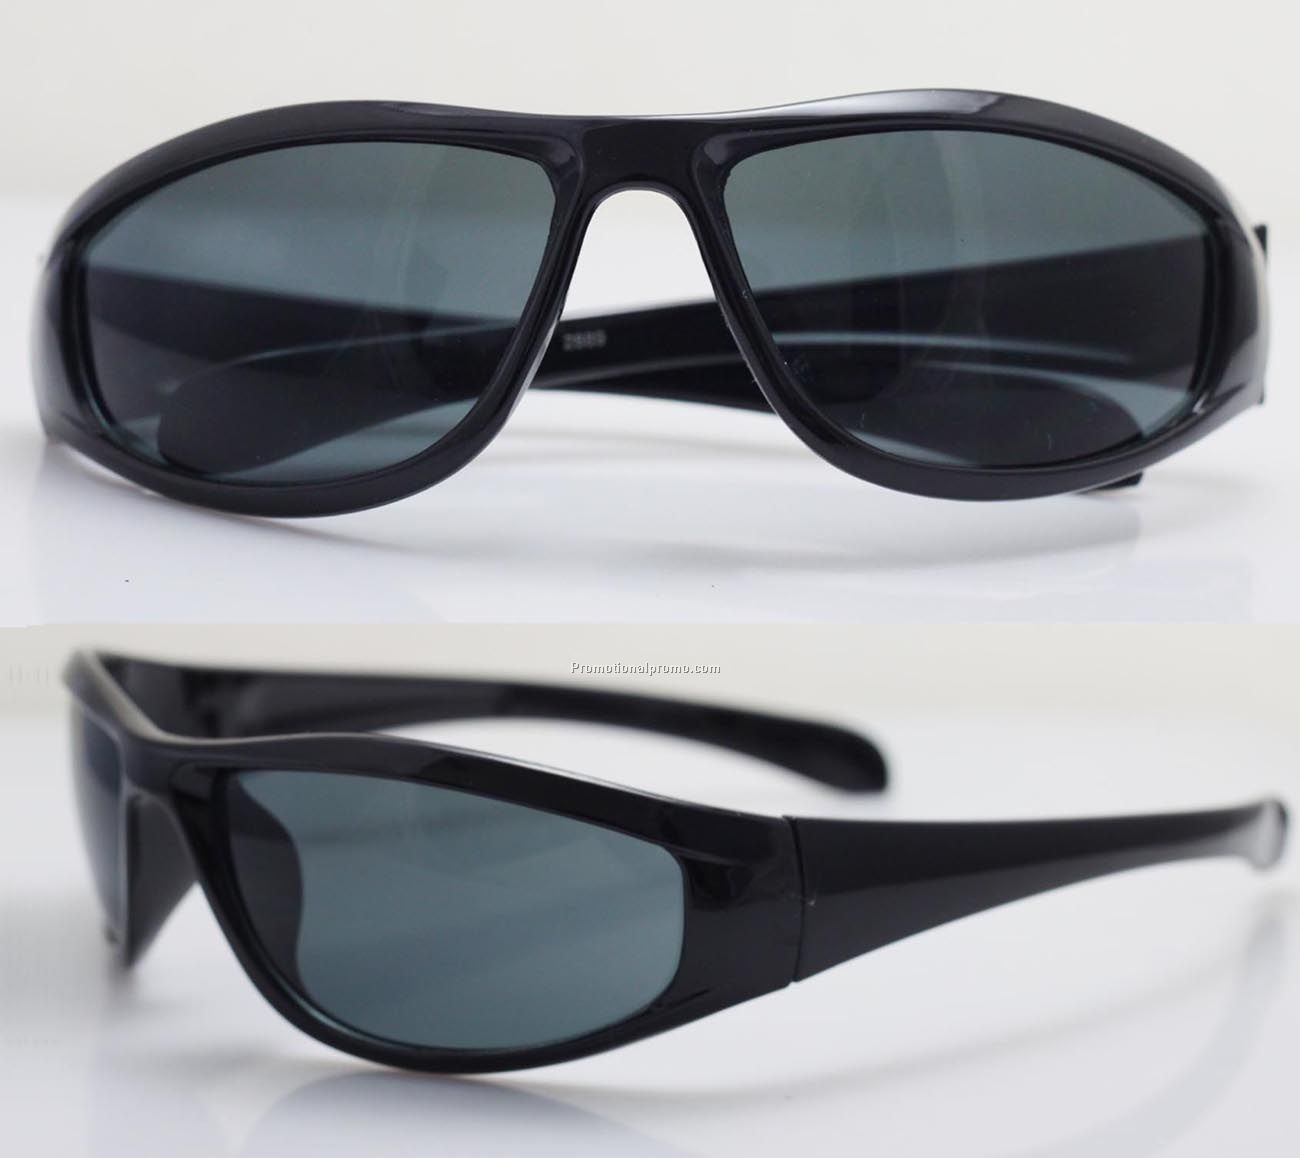 Black plastic sunglasses, Promotional sports sunglasses